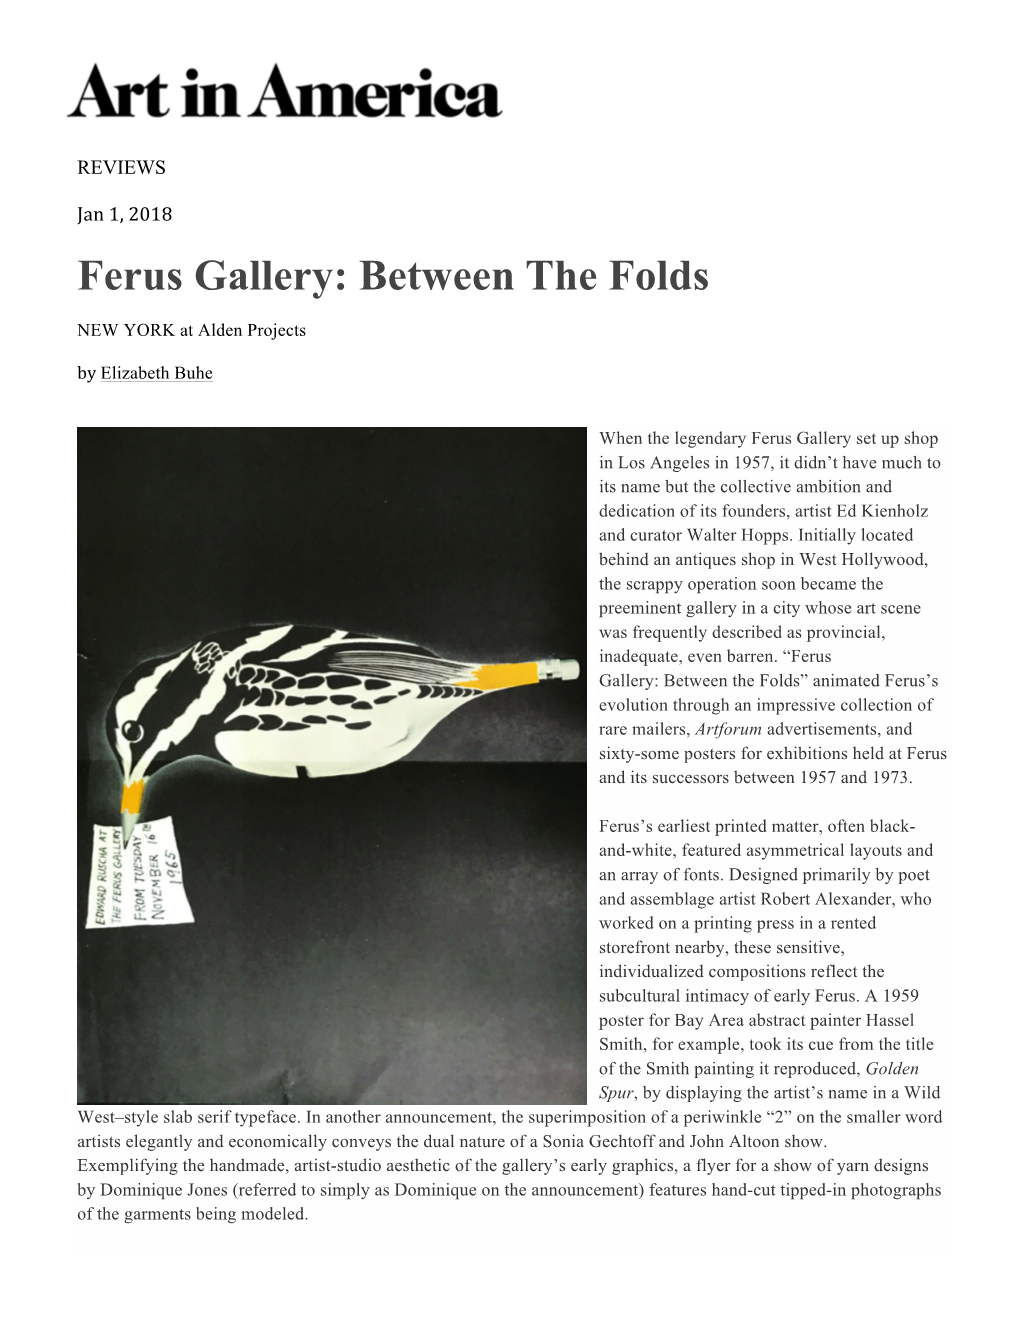 Ferus Gallery: Between the Folds